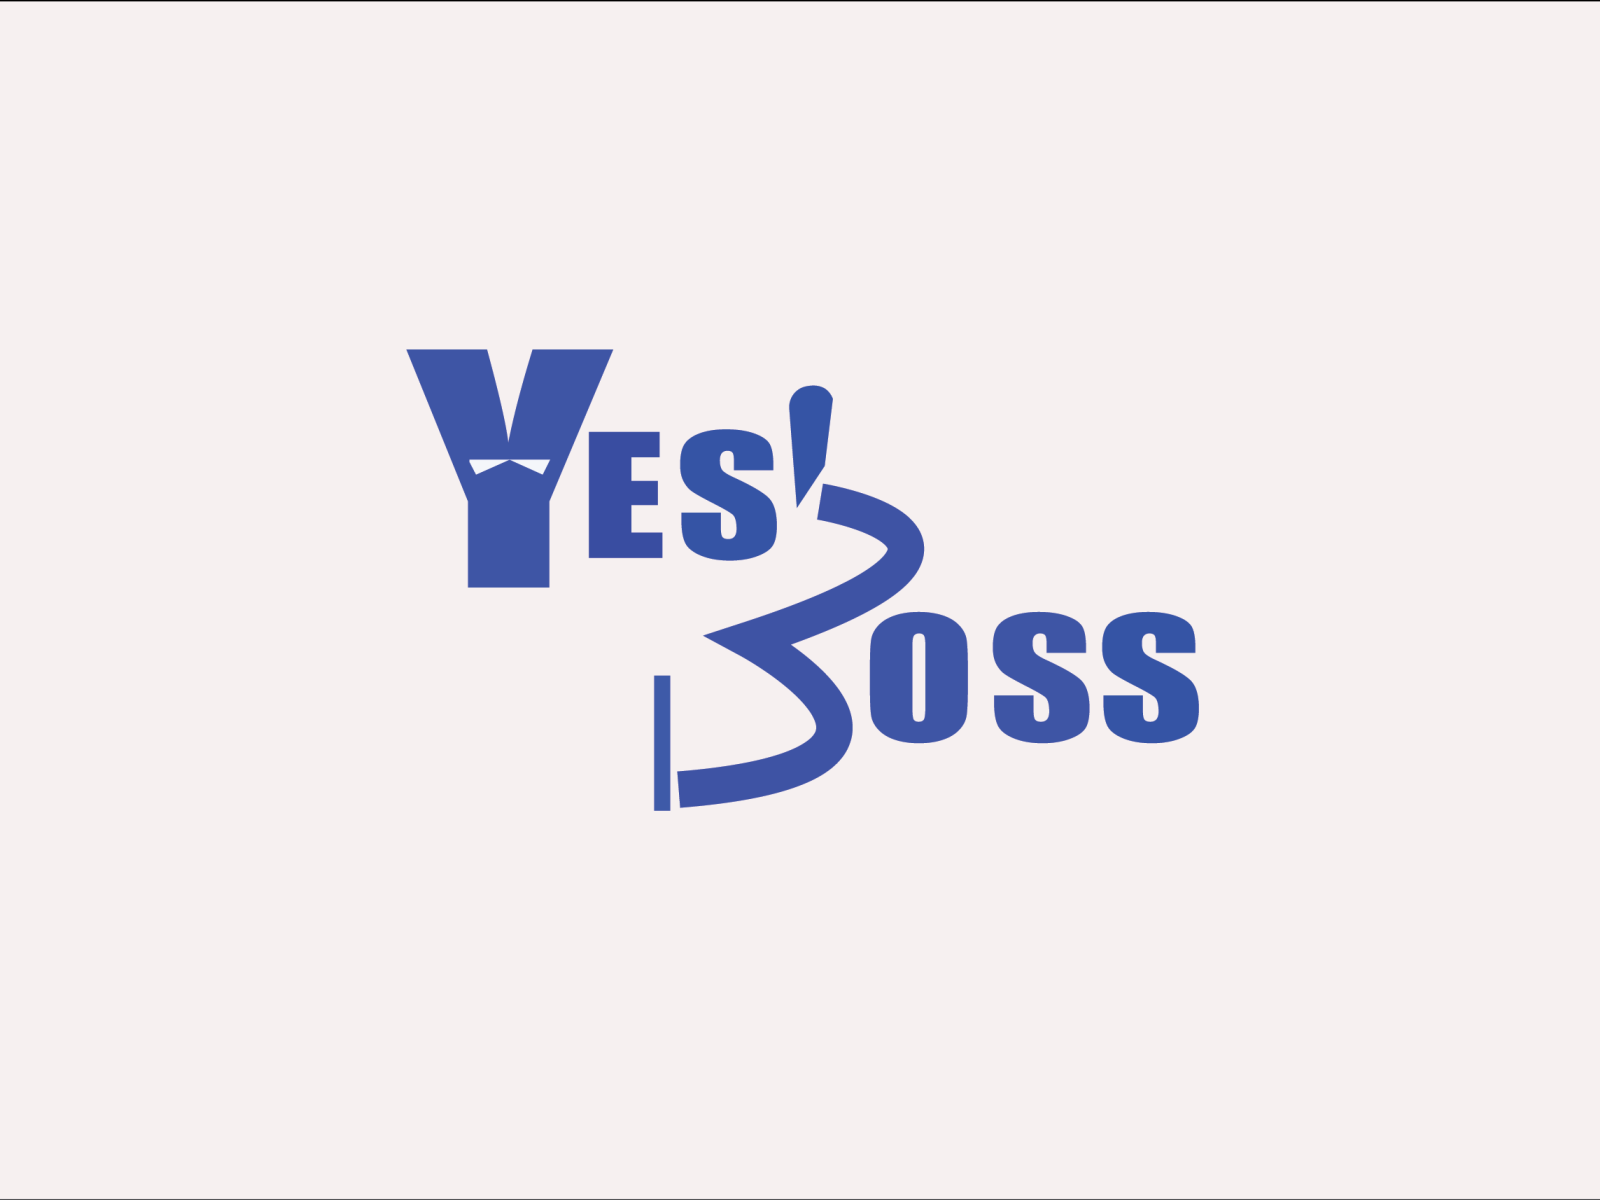 Boss yes Yes Boss